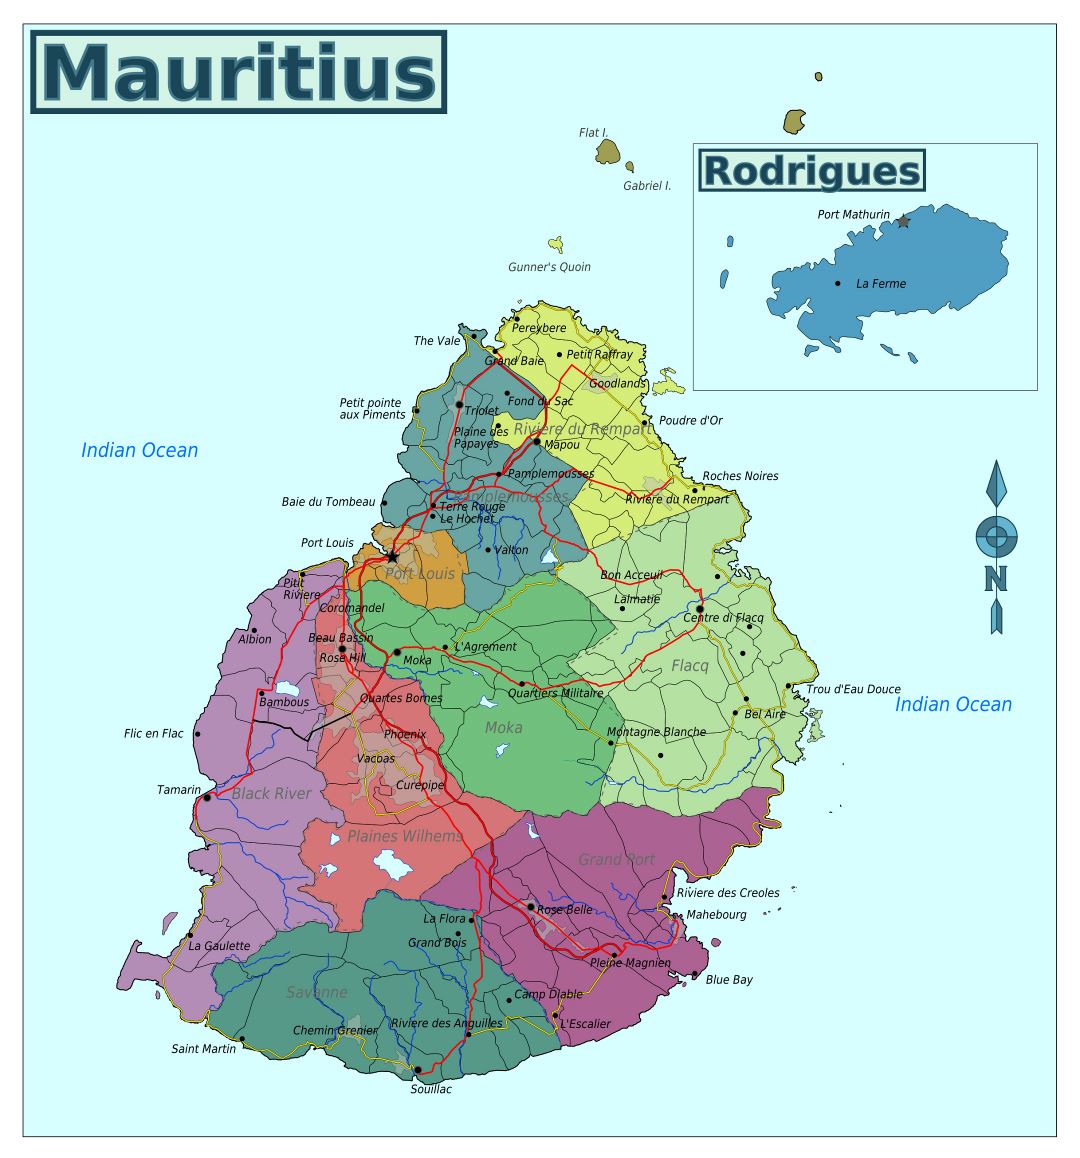 Large regions map of Mauritius